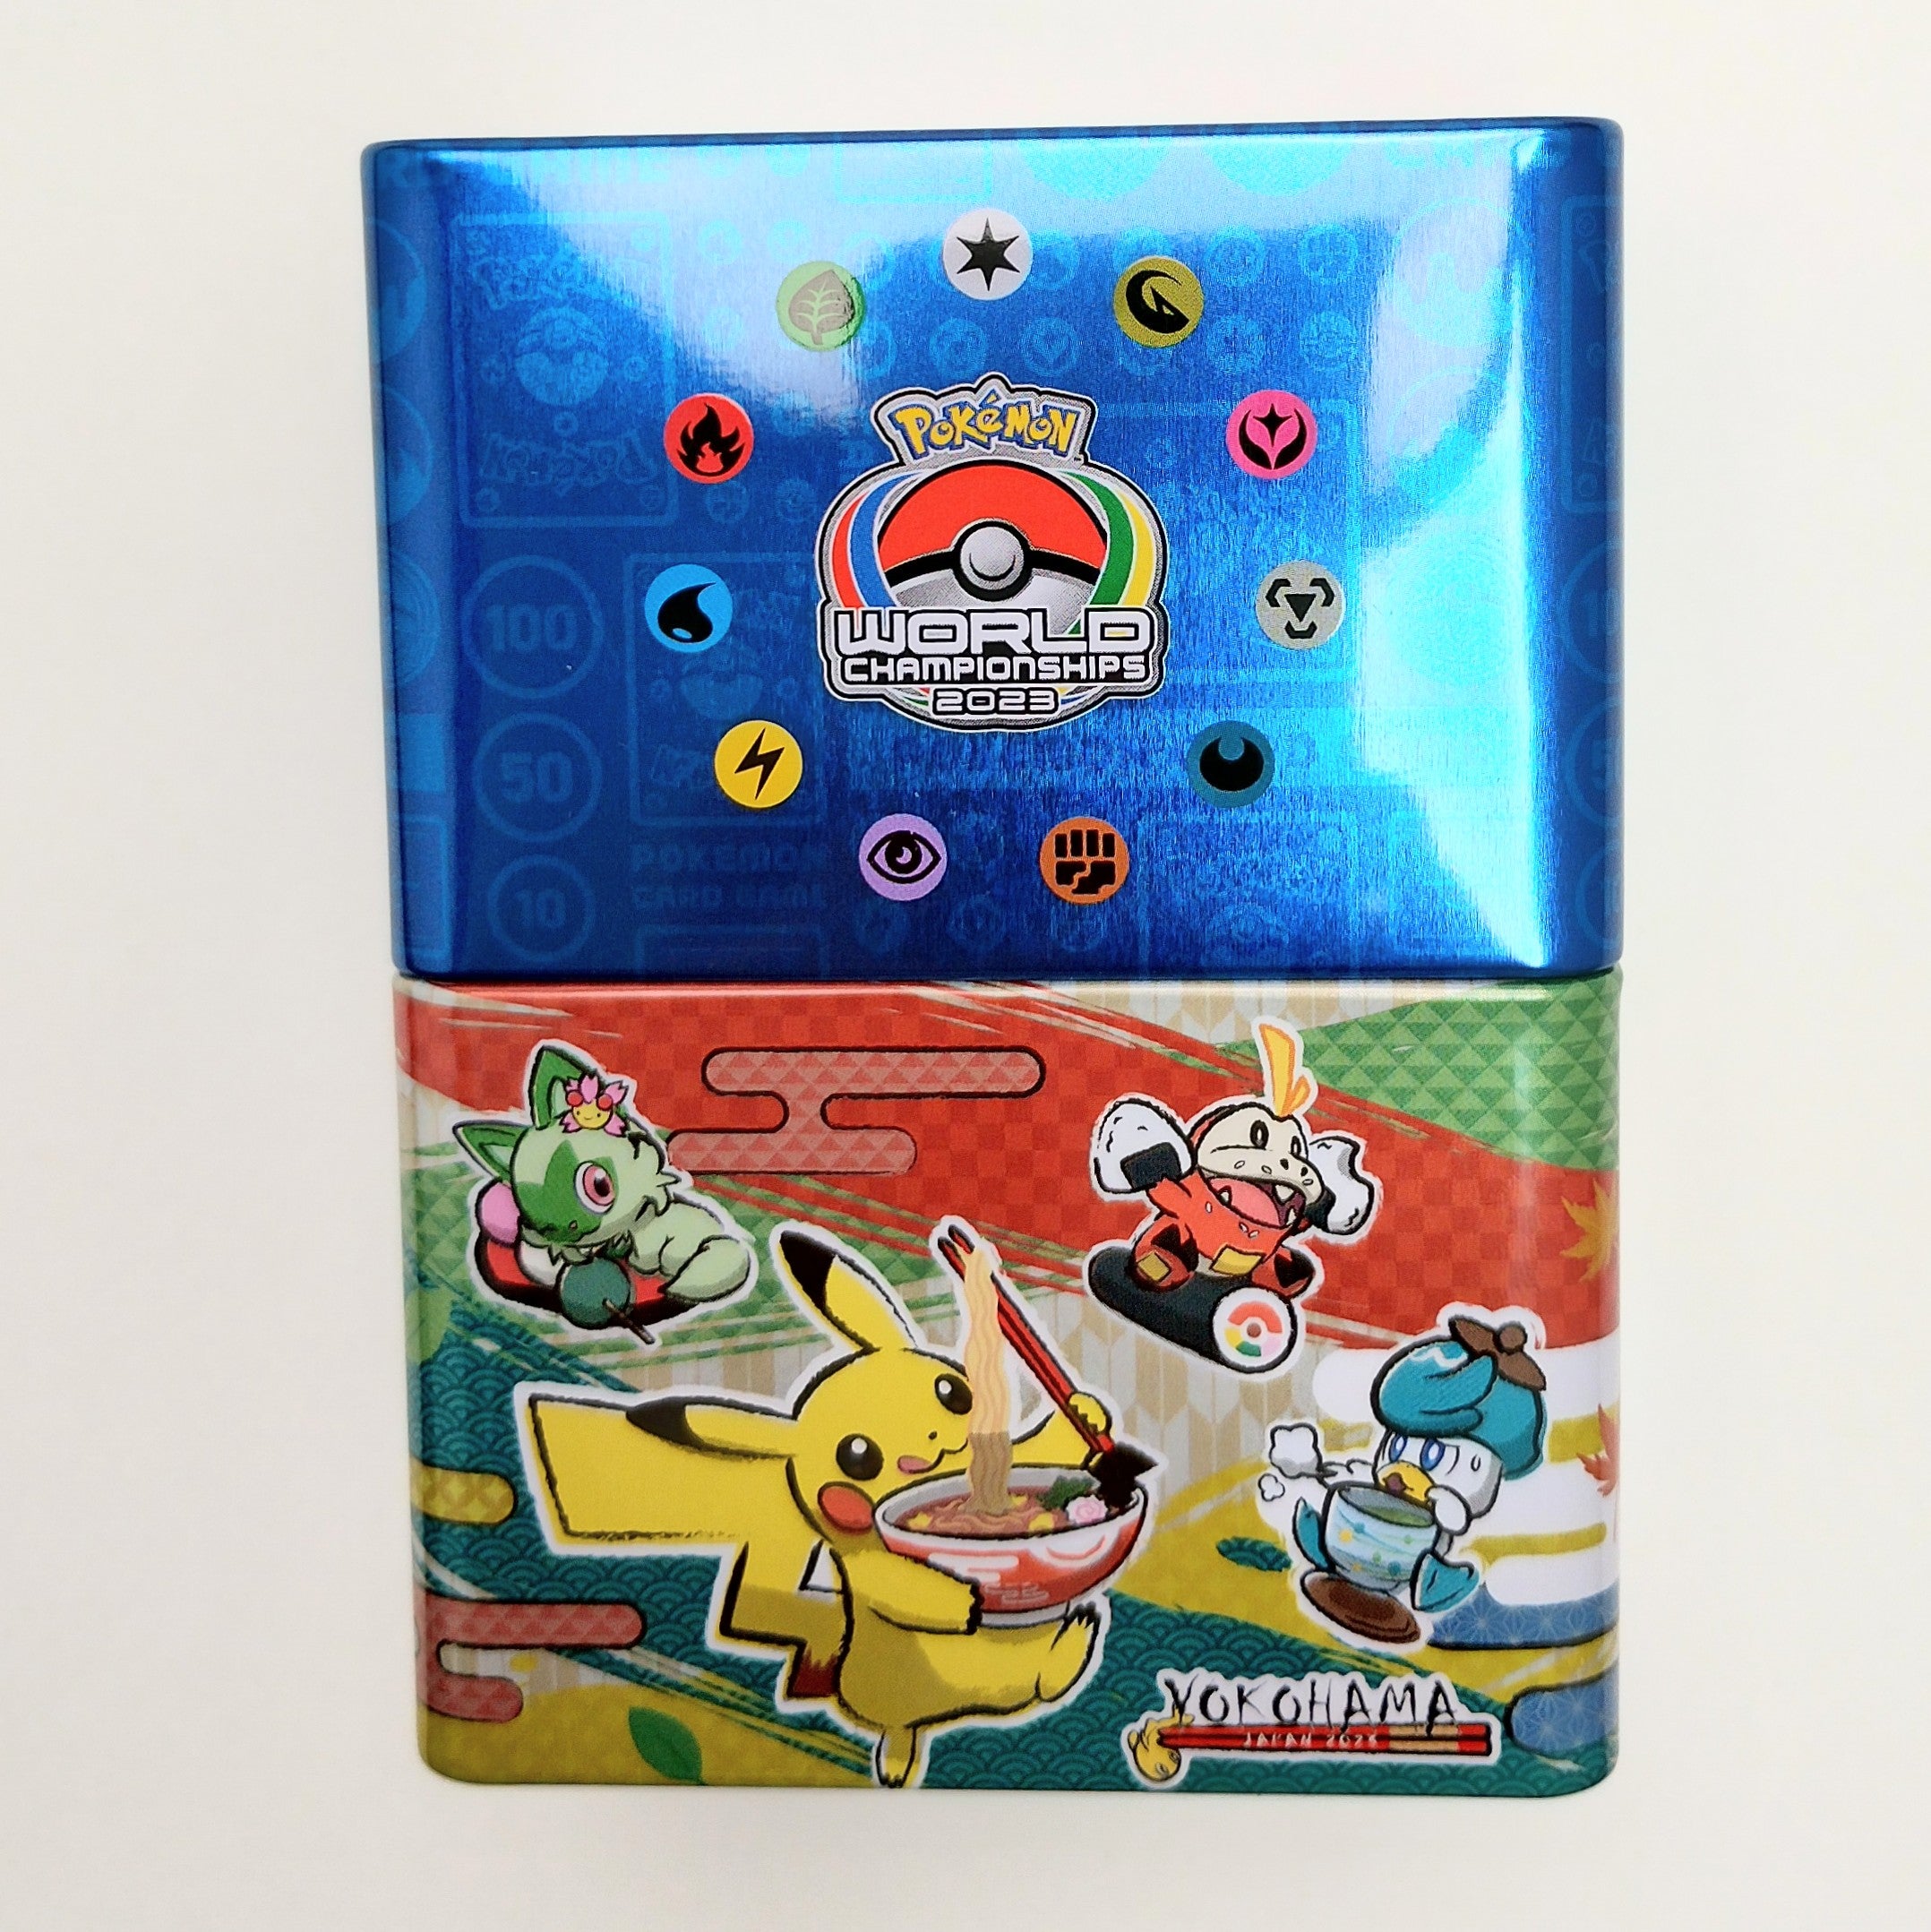 Pokemon Cards Game - World Championship 2023 Yokohama Deck Pikachu Japanese